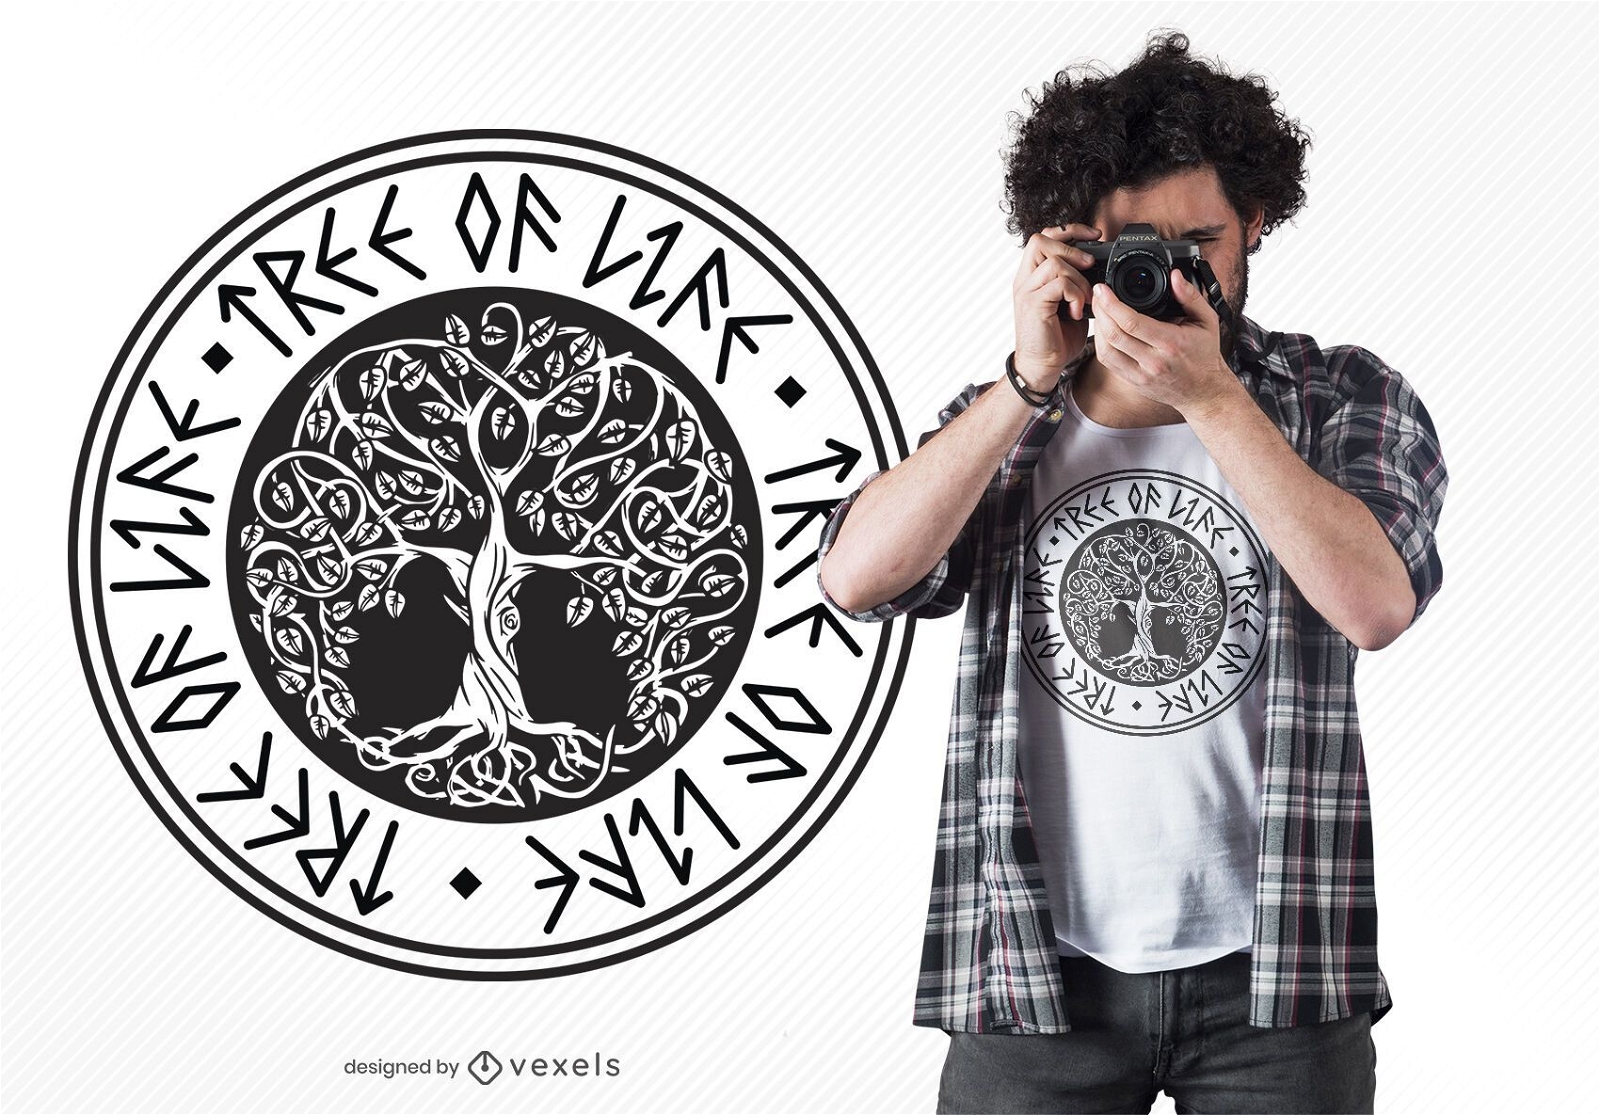 Tree of life t-shirt design